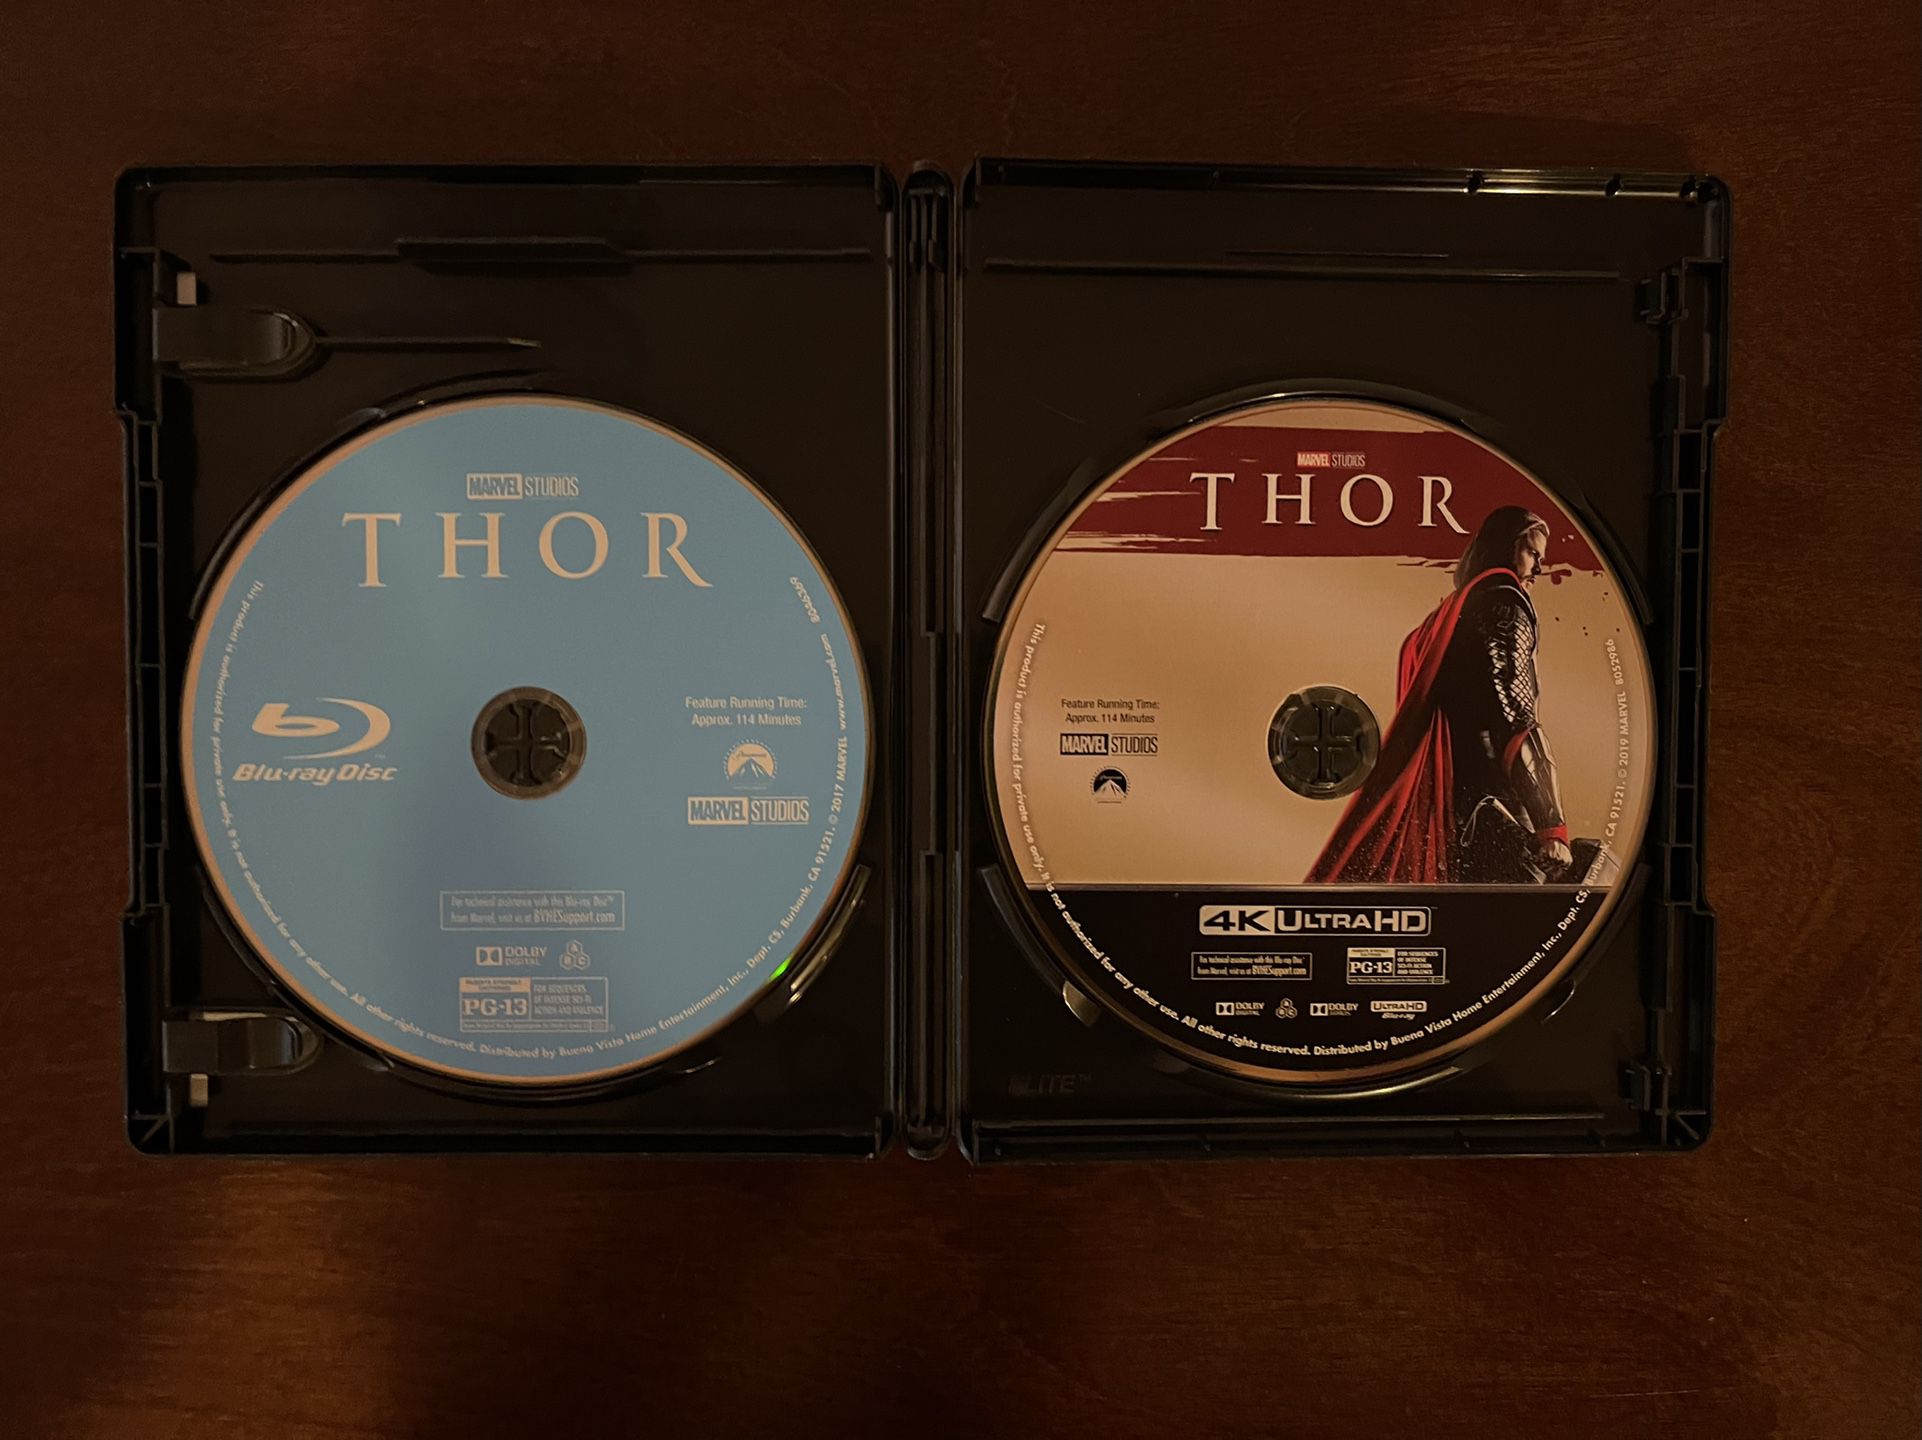 Marvel Studios (MCU) 4K UHD Blu Ray DVD Movies (Thor, Guardians of the Galaxy, Ant-Man)